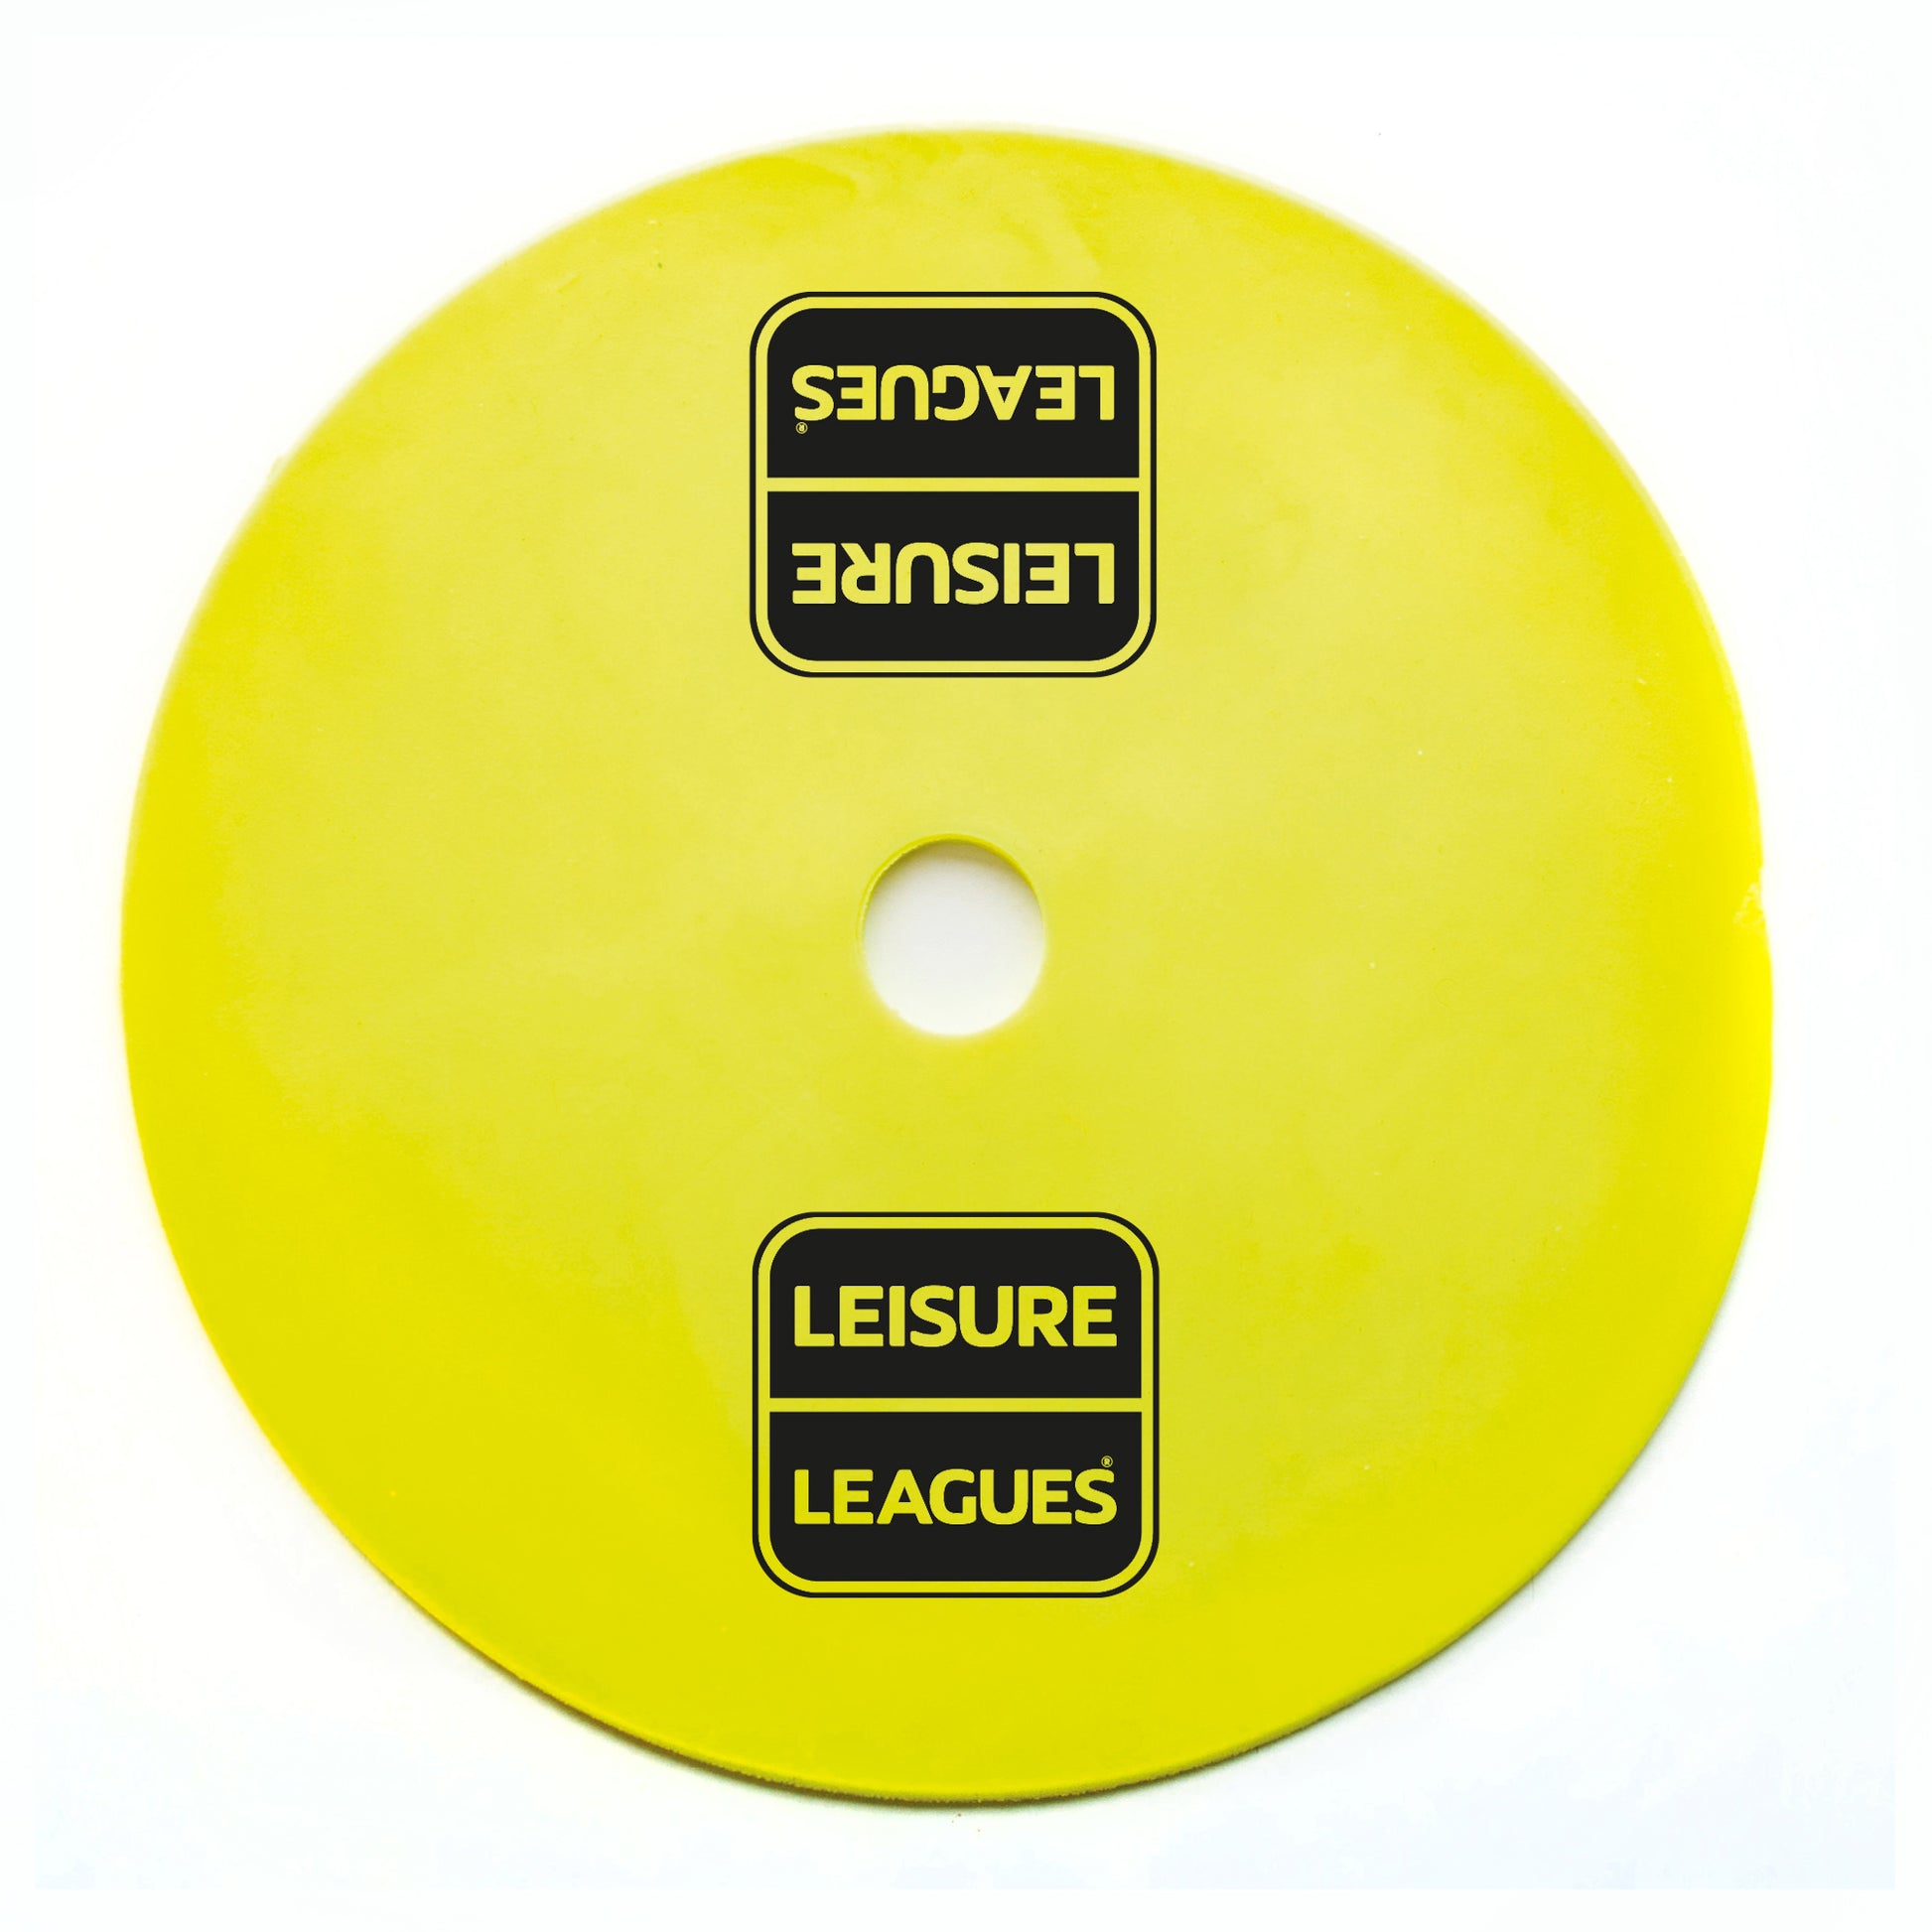 Leisure leagues football Flat Cones